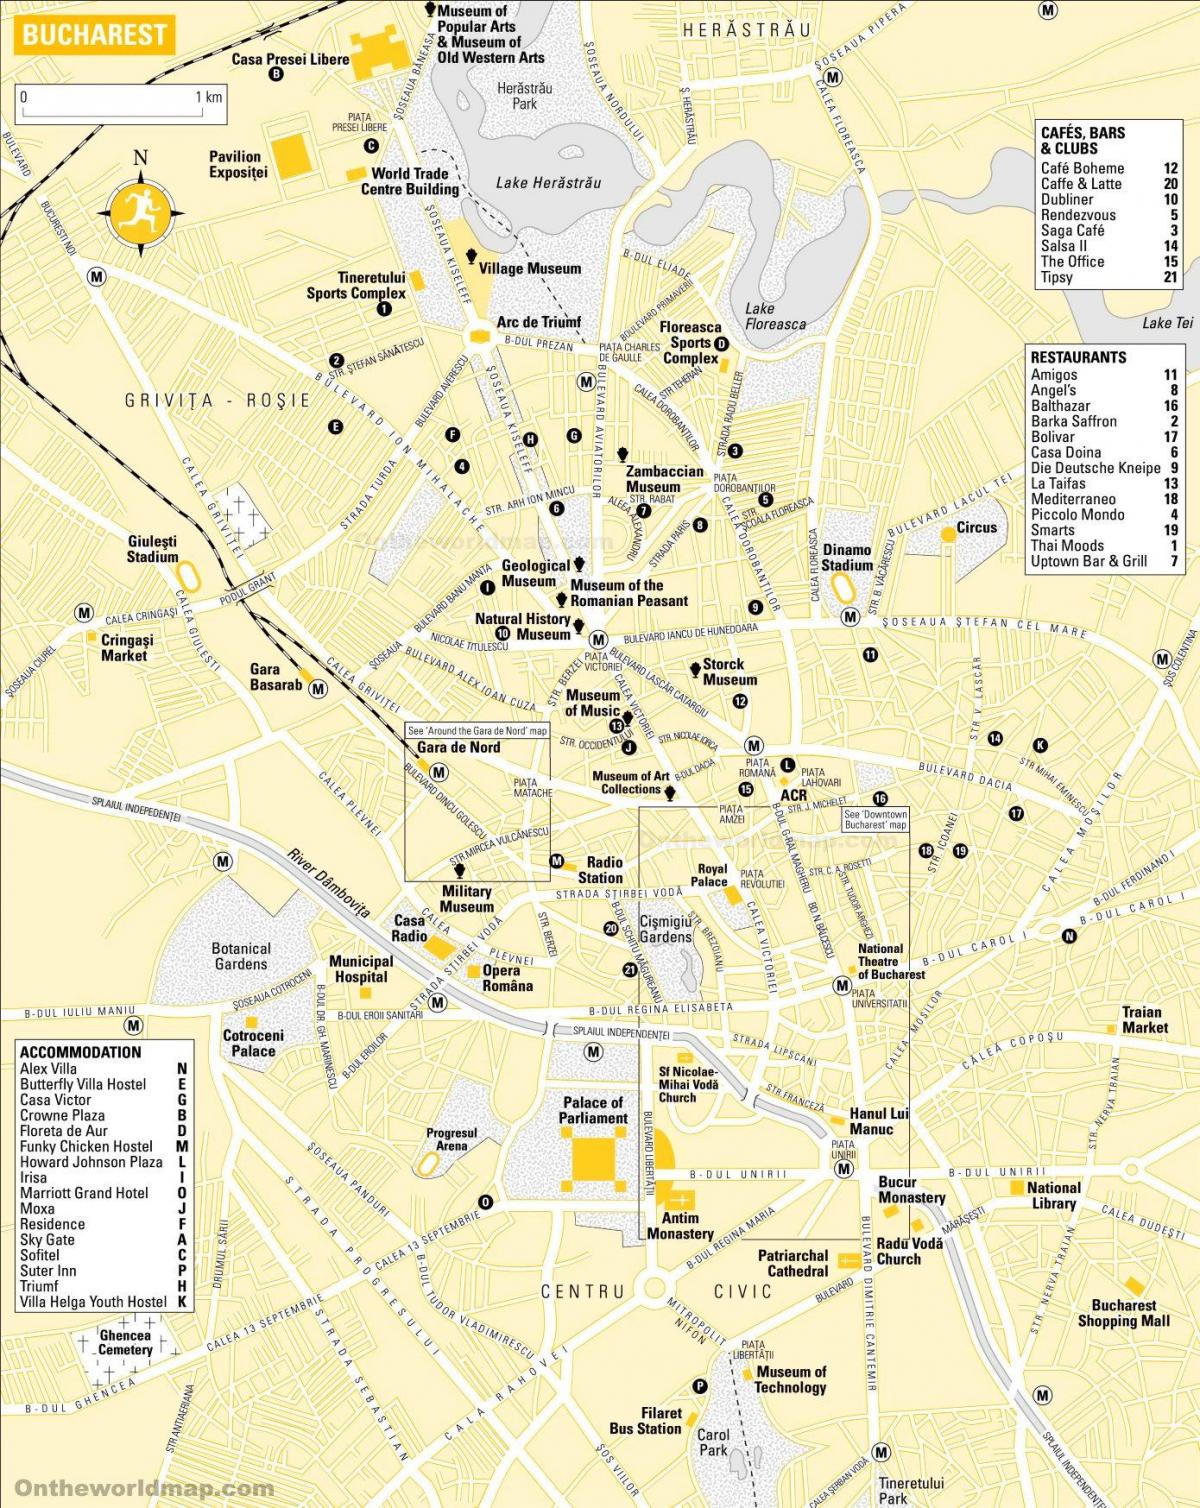 Mappa dei tour a piedi di Bucarest